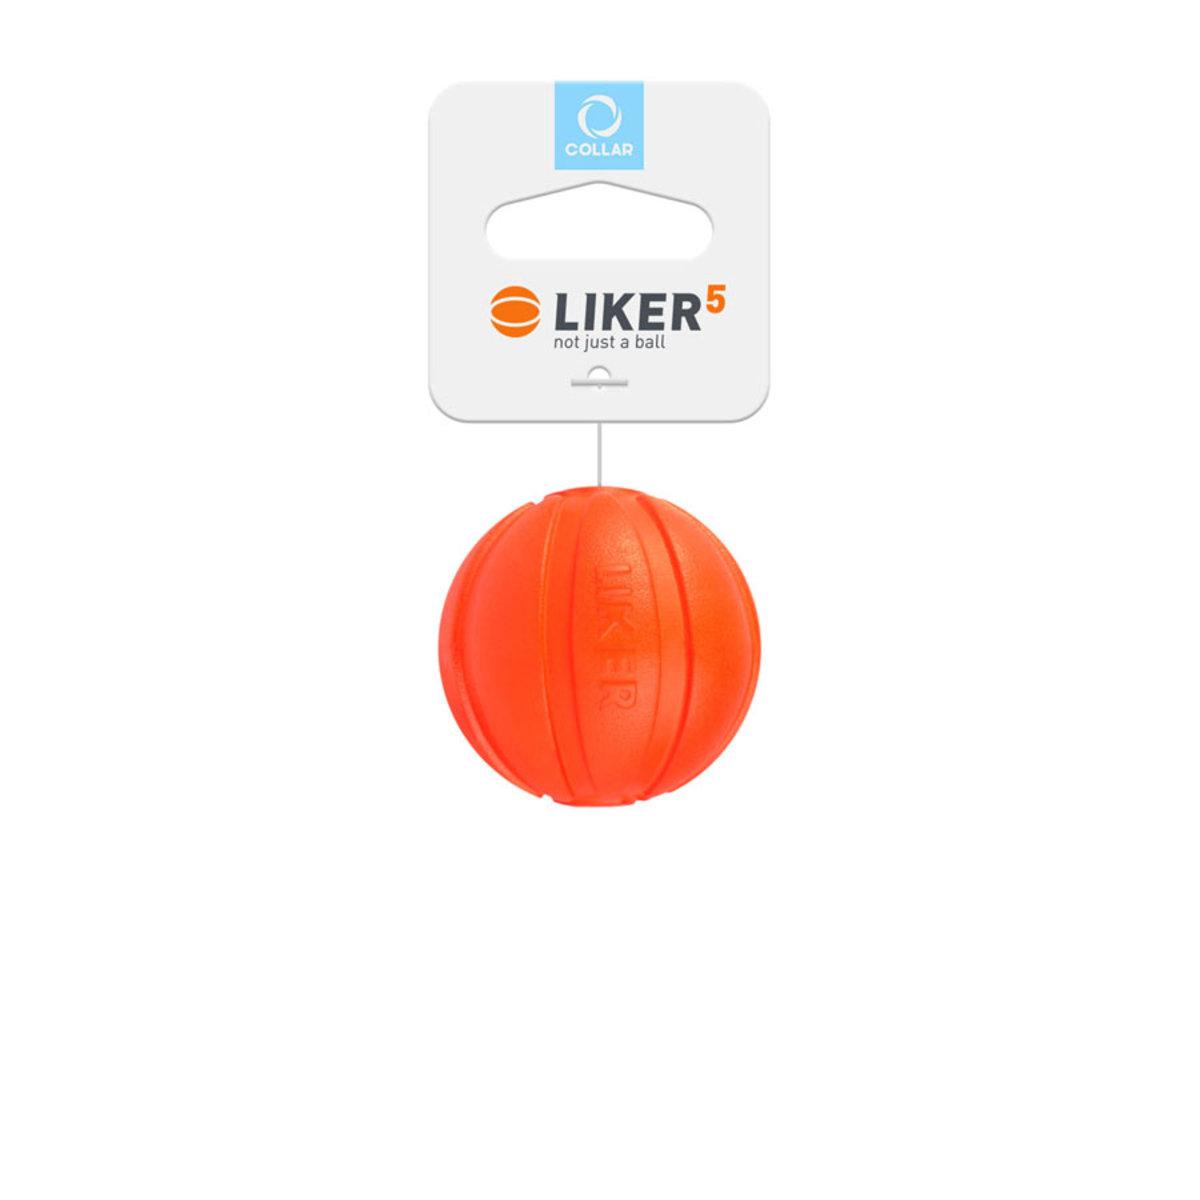 М'ячик LIKER Лайкер для собак, 5 см, фото 1